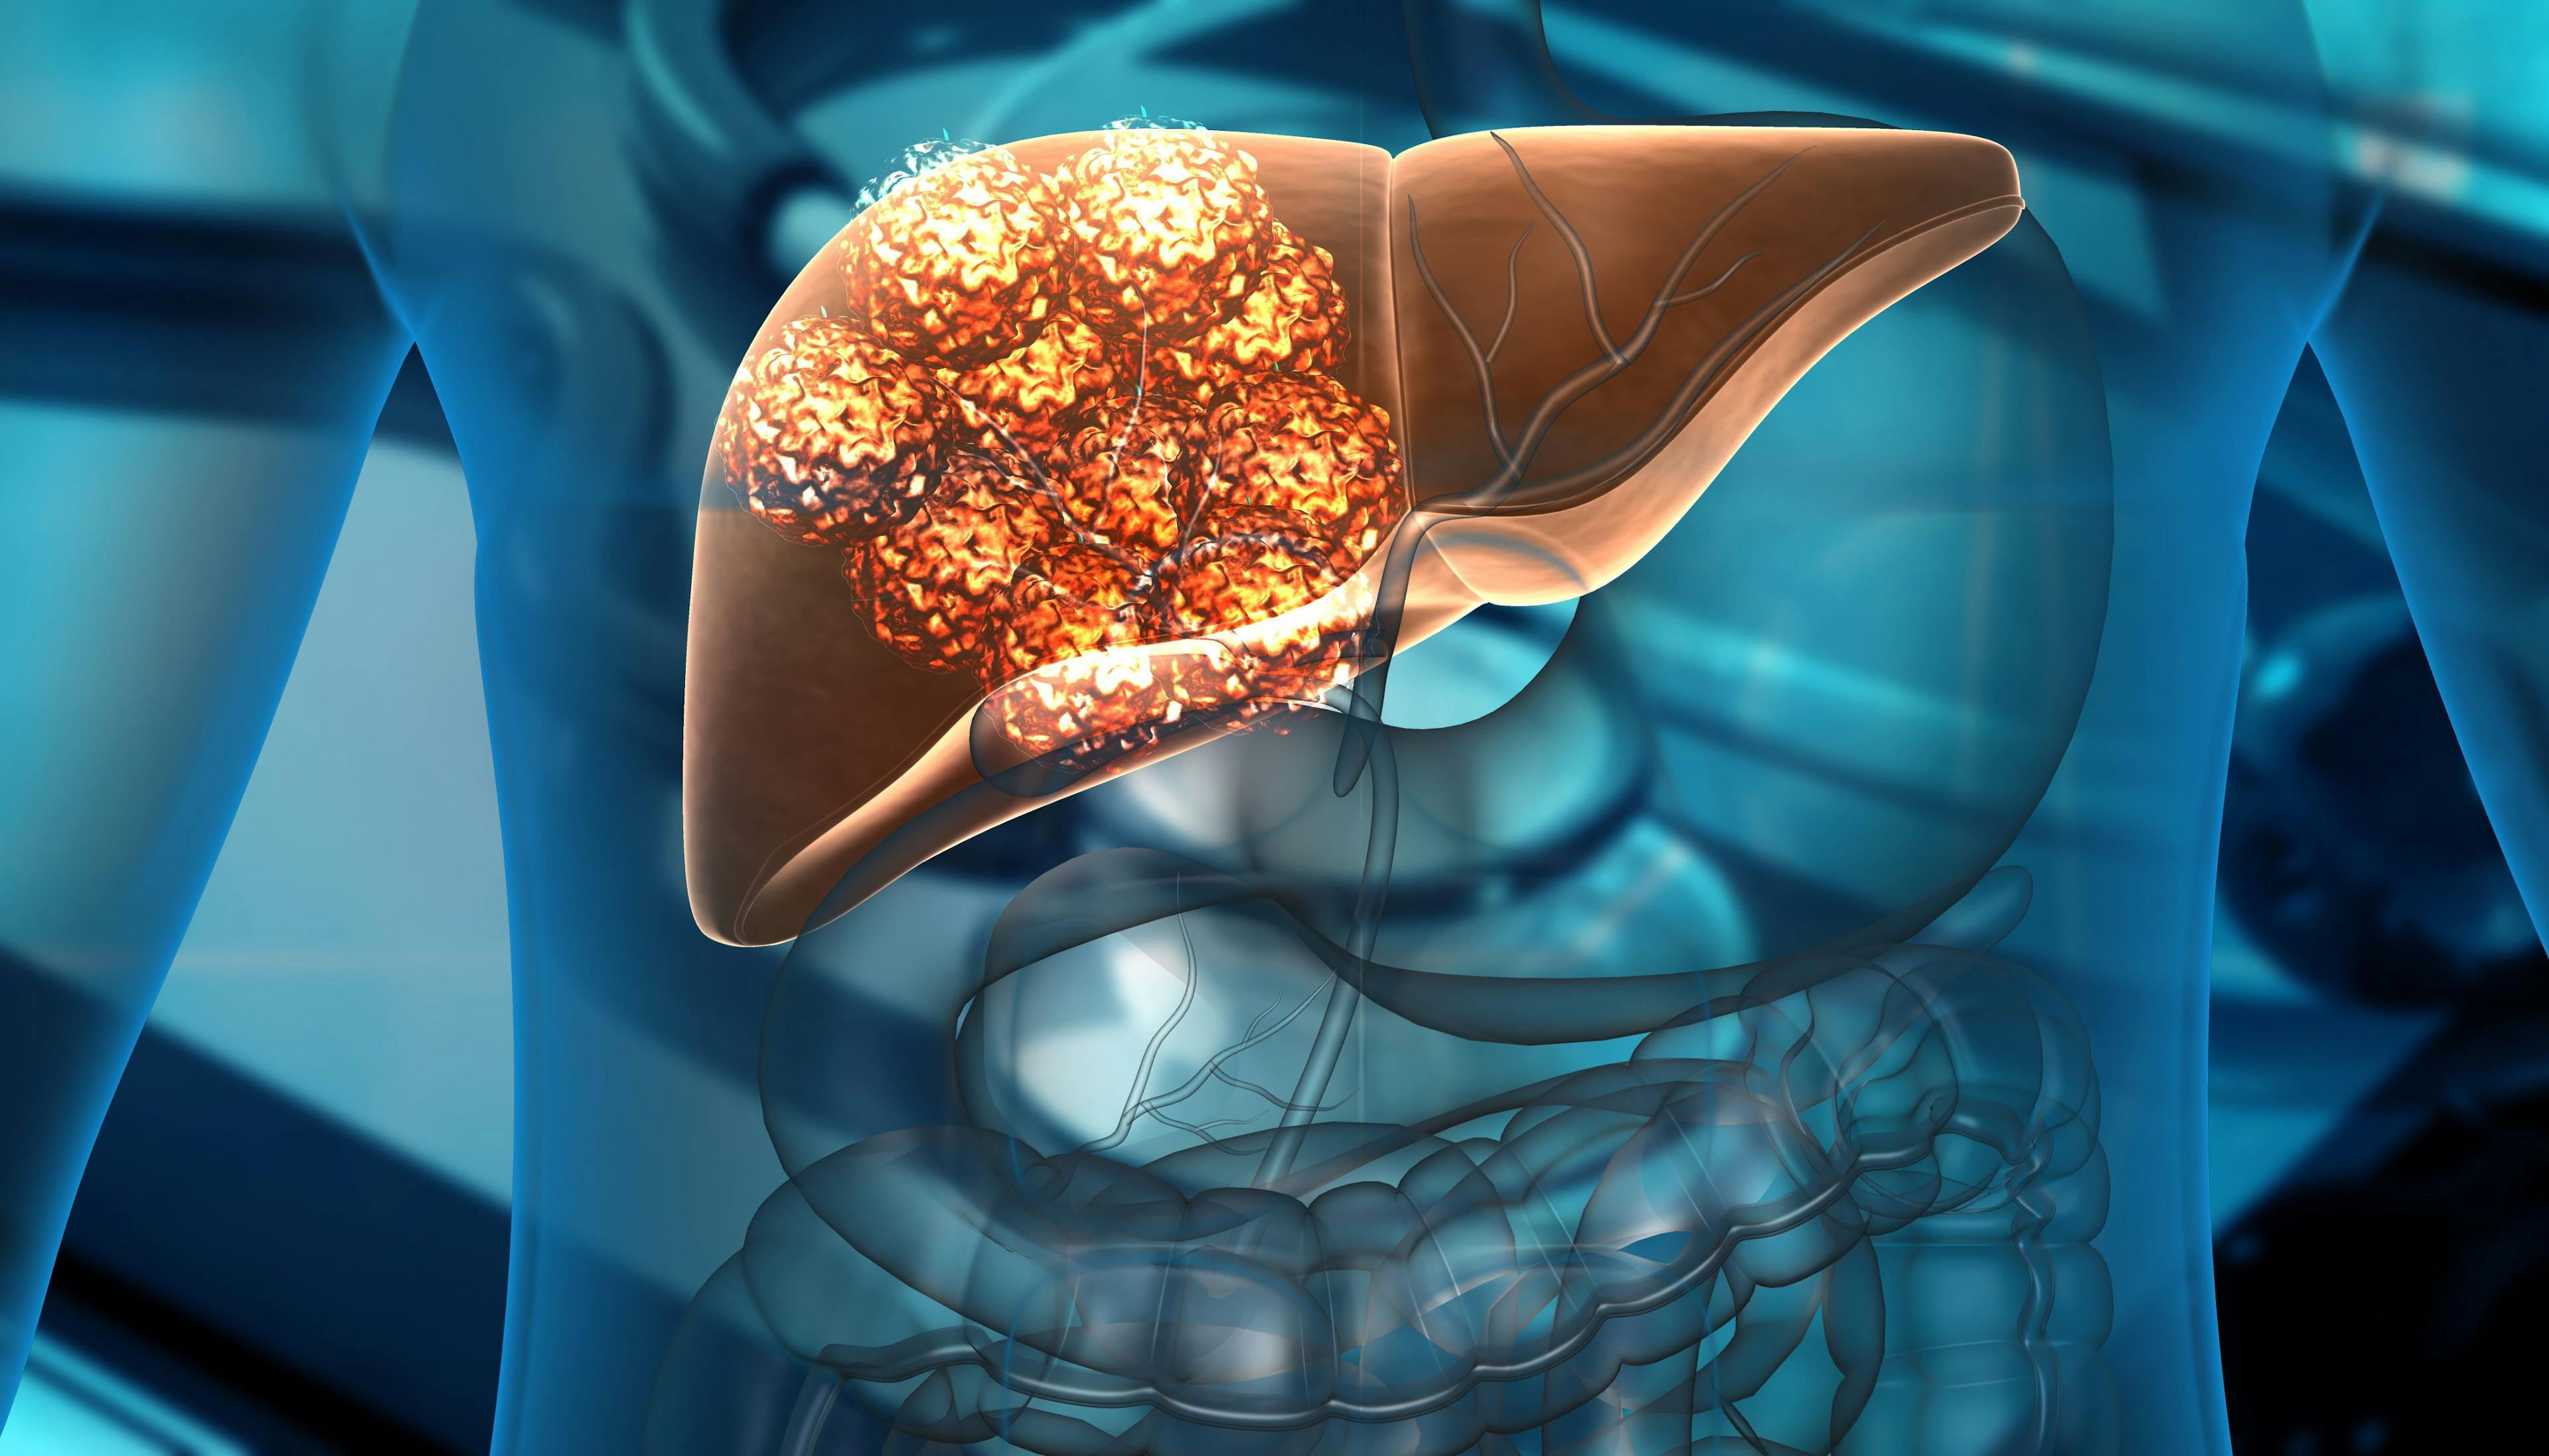 Human liver cancer cell growth. 3d illustration: © Rasi - stock.adobe.com